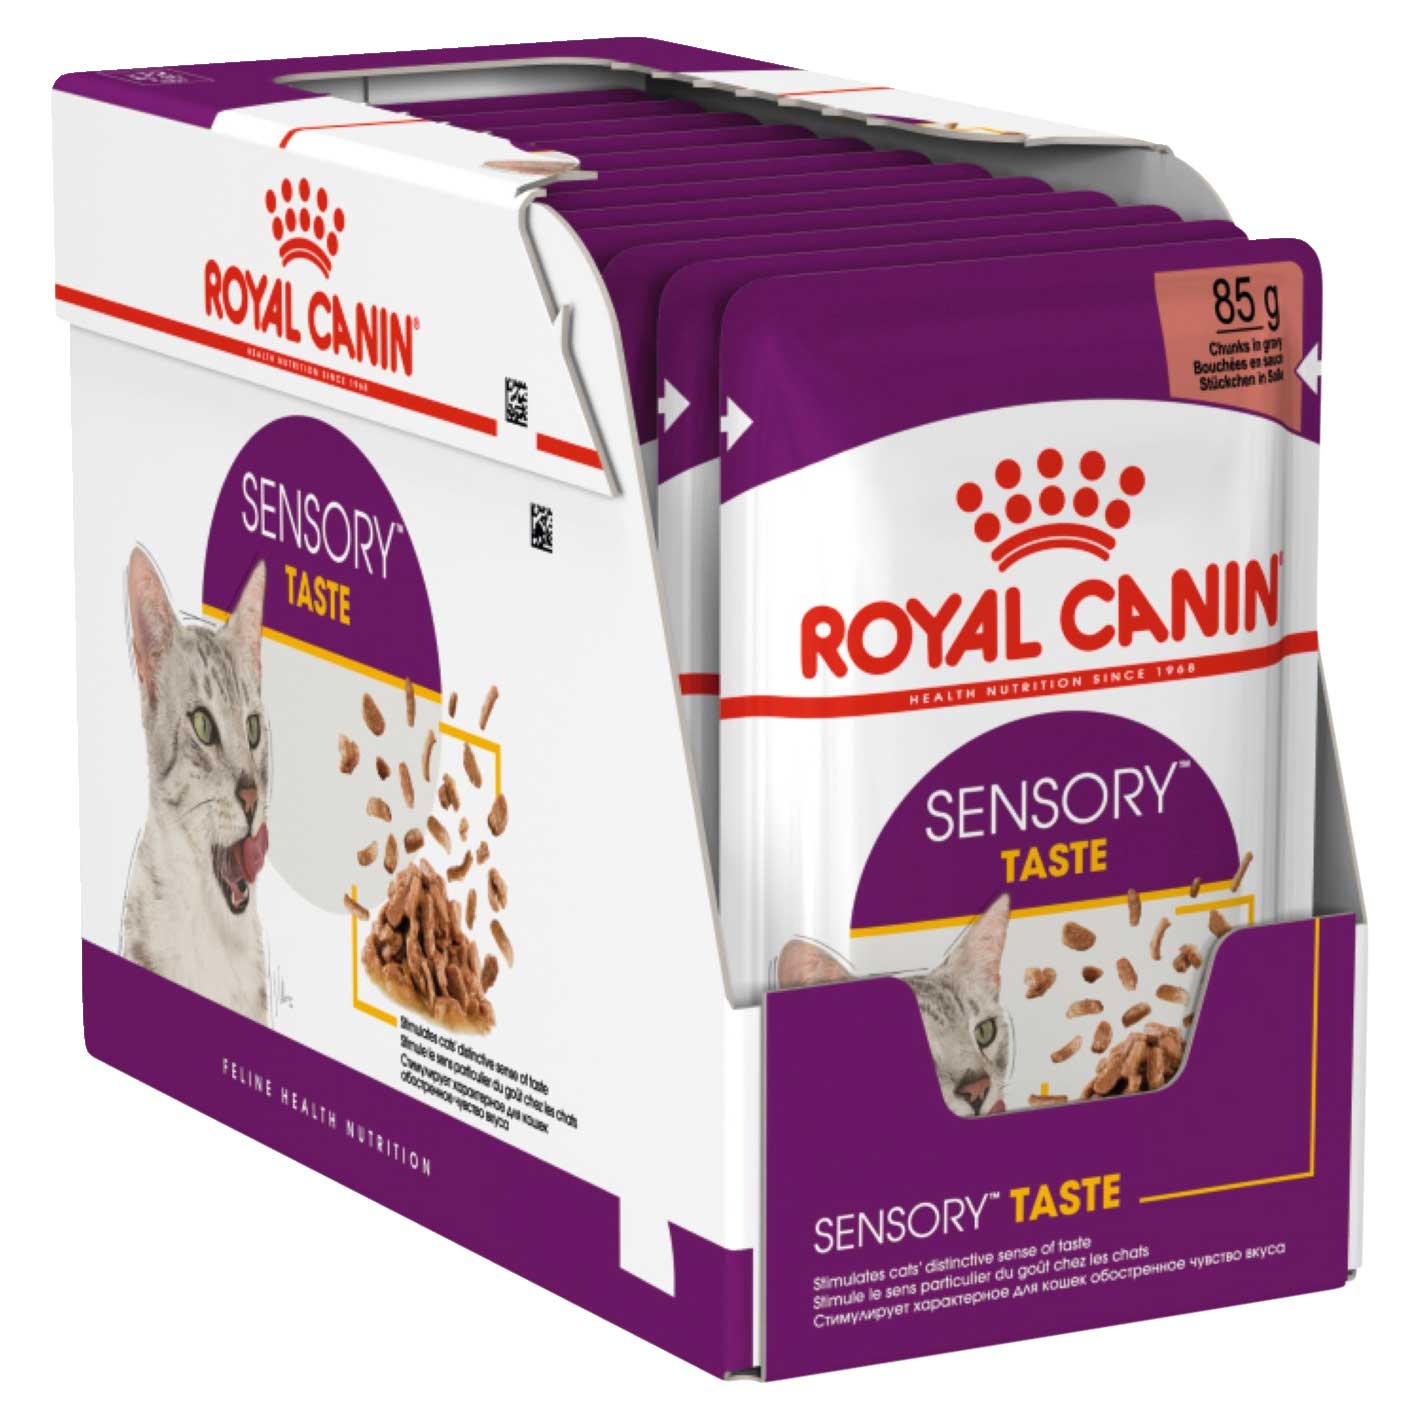 Royal Canin Cat Food Pouch Adult Sensory Taste Gravy